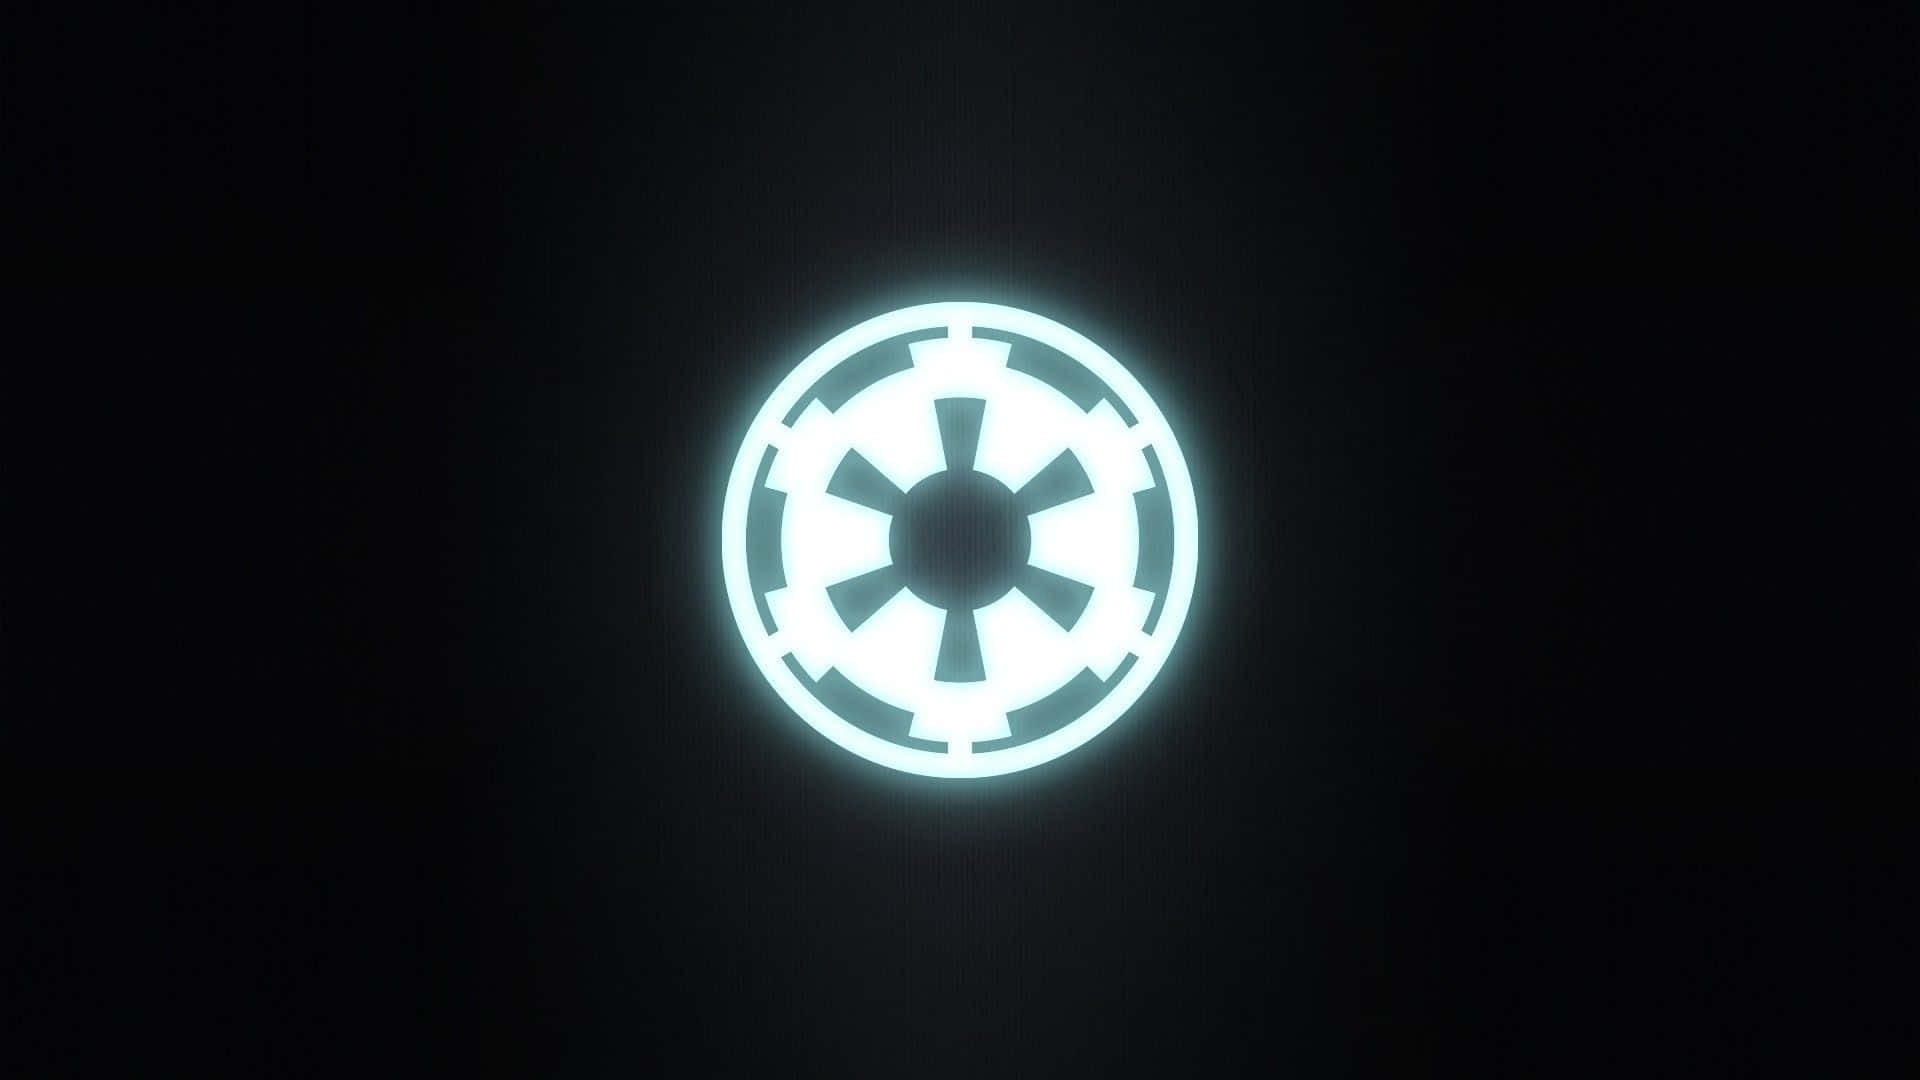 The iconic Star Wars Empire logo Wallpaper